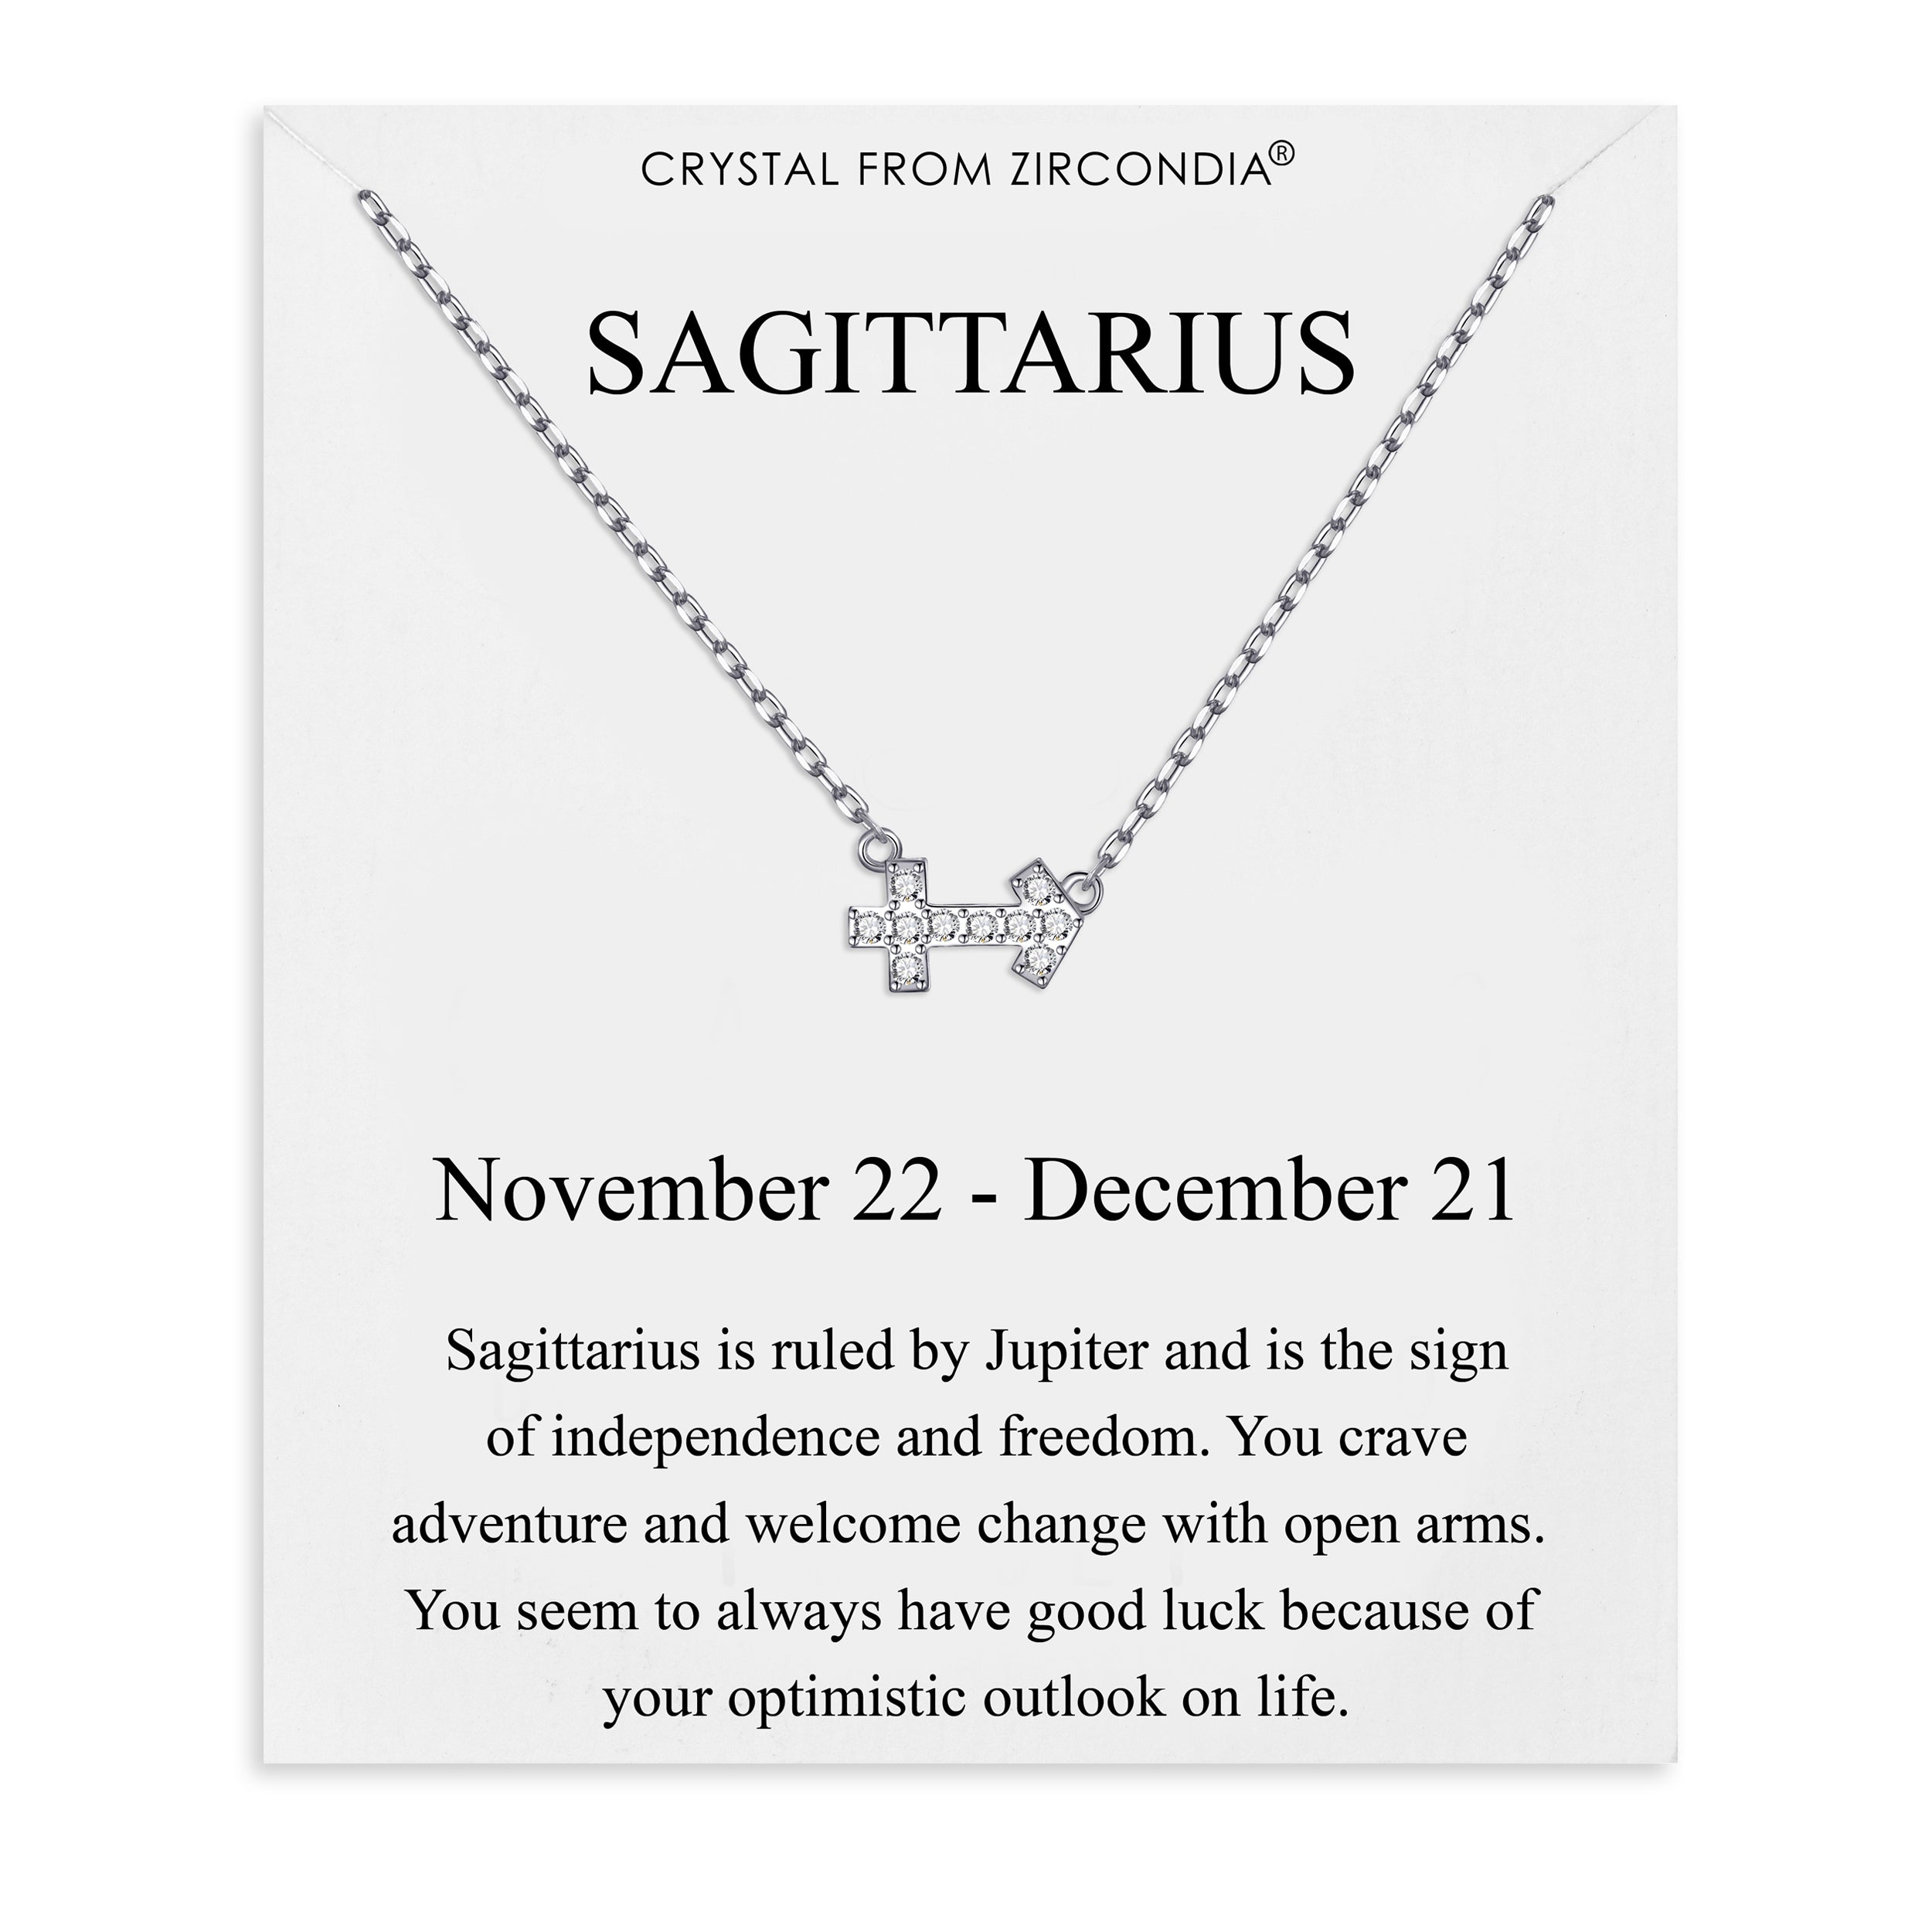 Sagittarius Zodiac Star Sign Necklace Created with Zircondia® Crystals by Philip Jones Jewellery